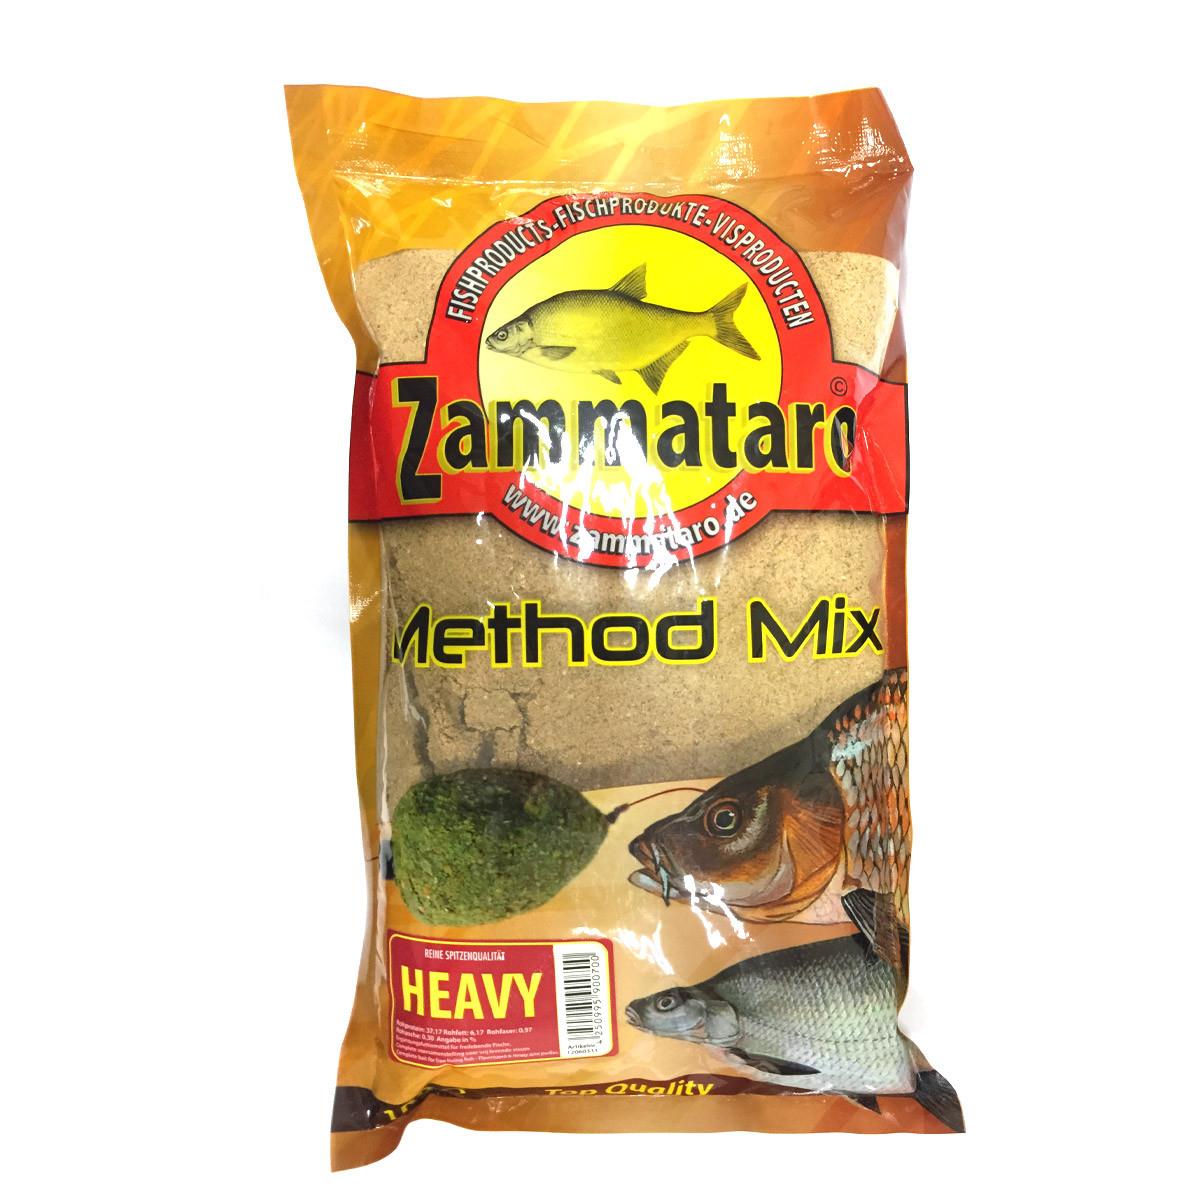 Zammataro Method-Mix Heavy; 1 Kg